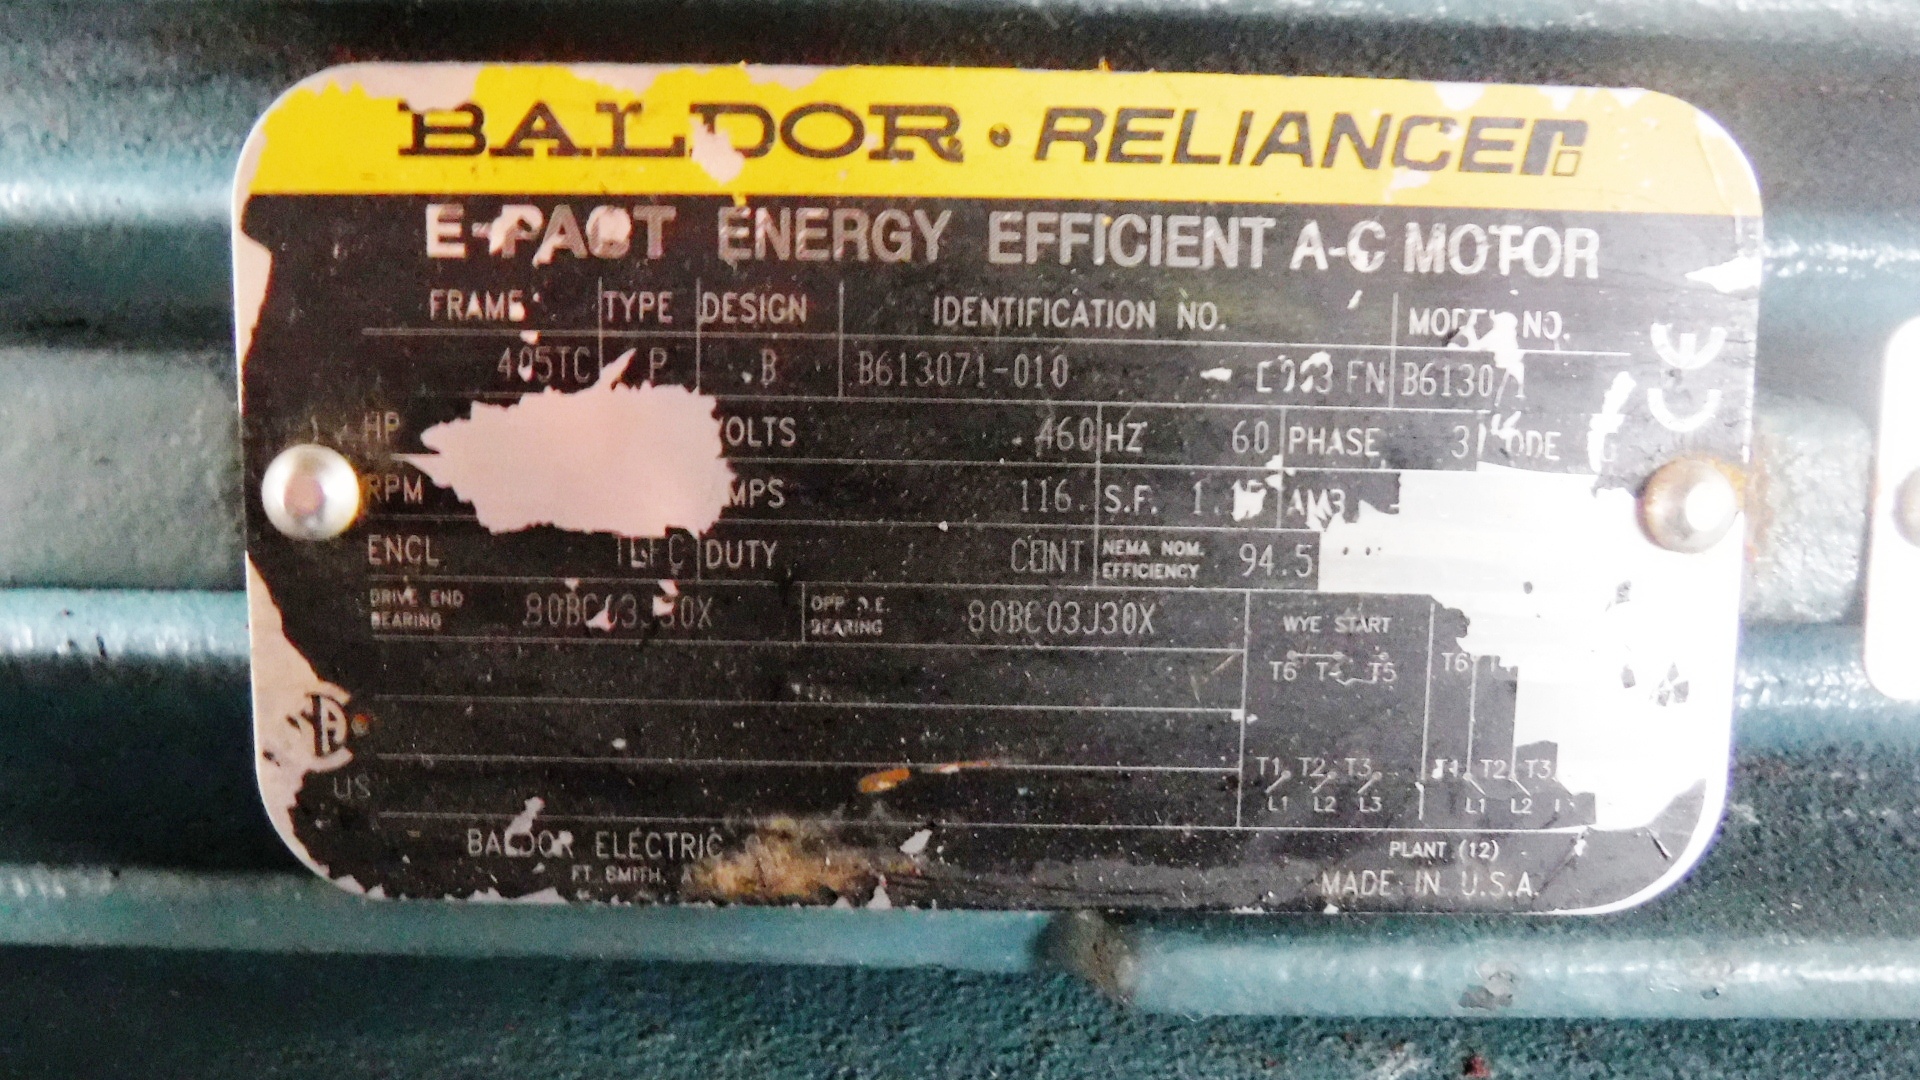 Baldor-Reliance 100 HP 1800 RPM 405TC Squirrel Cage Motors 78240